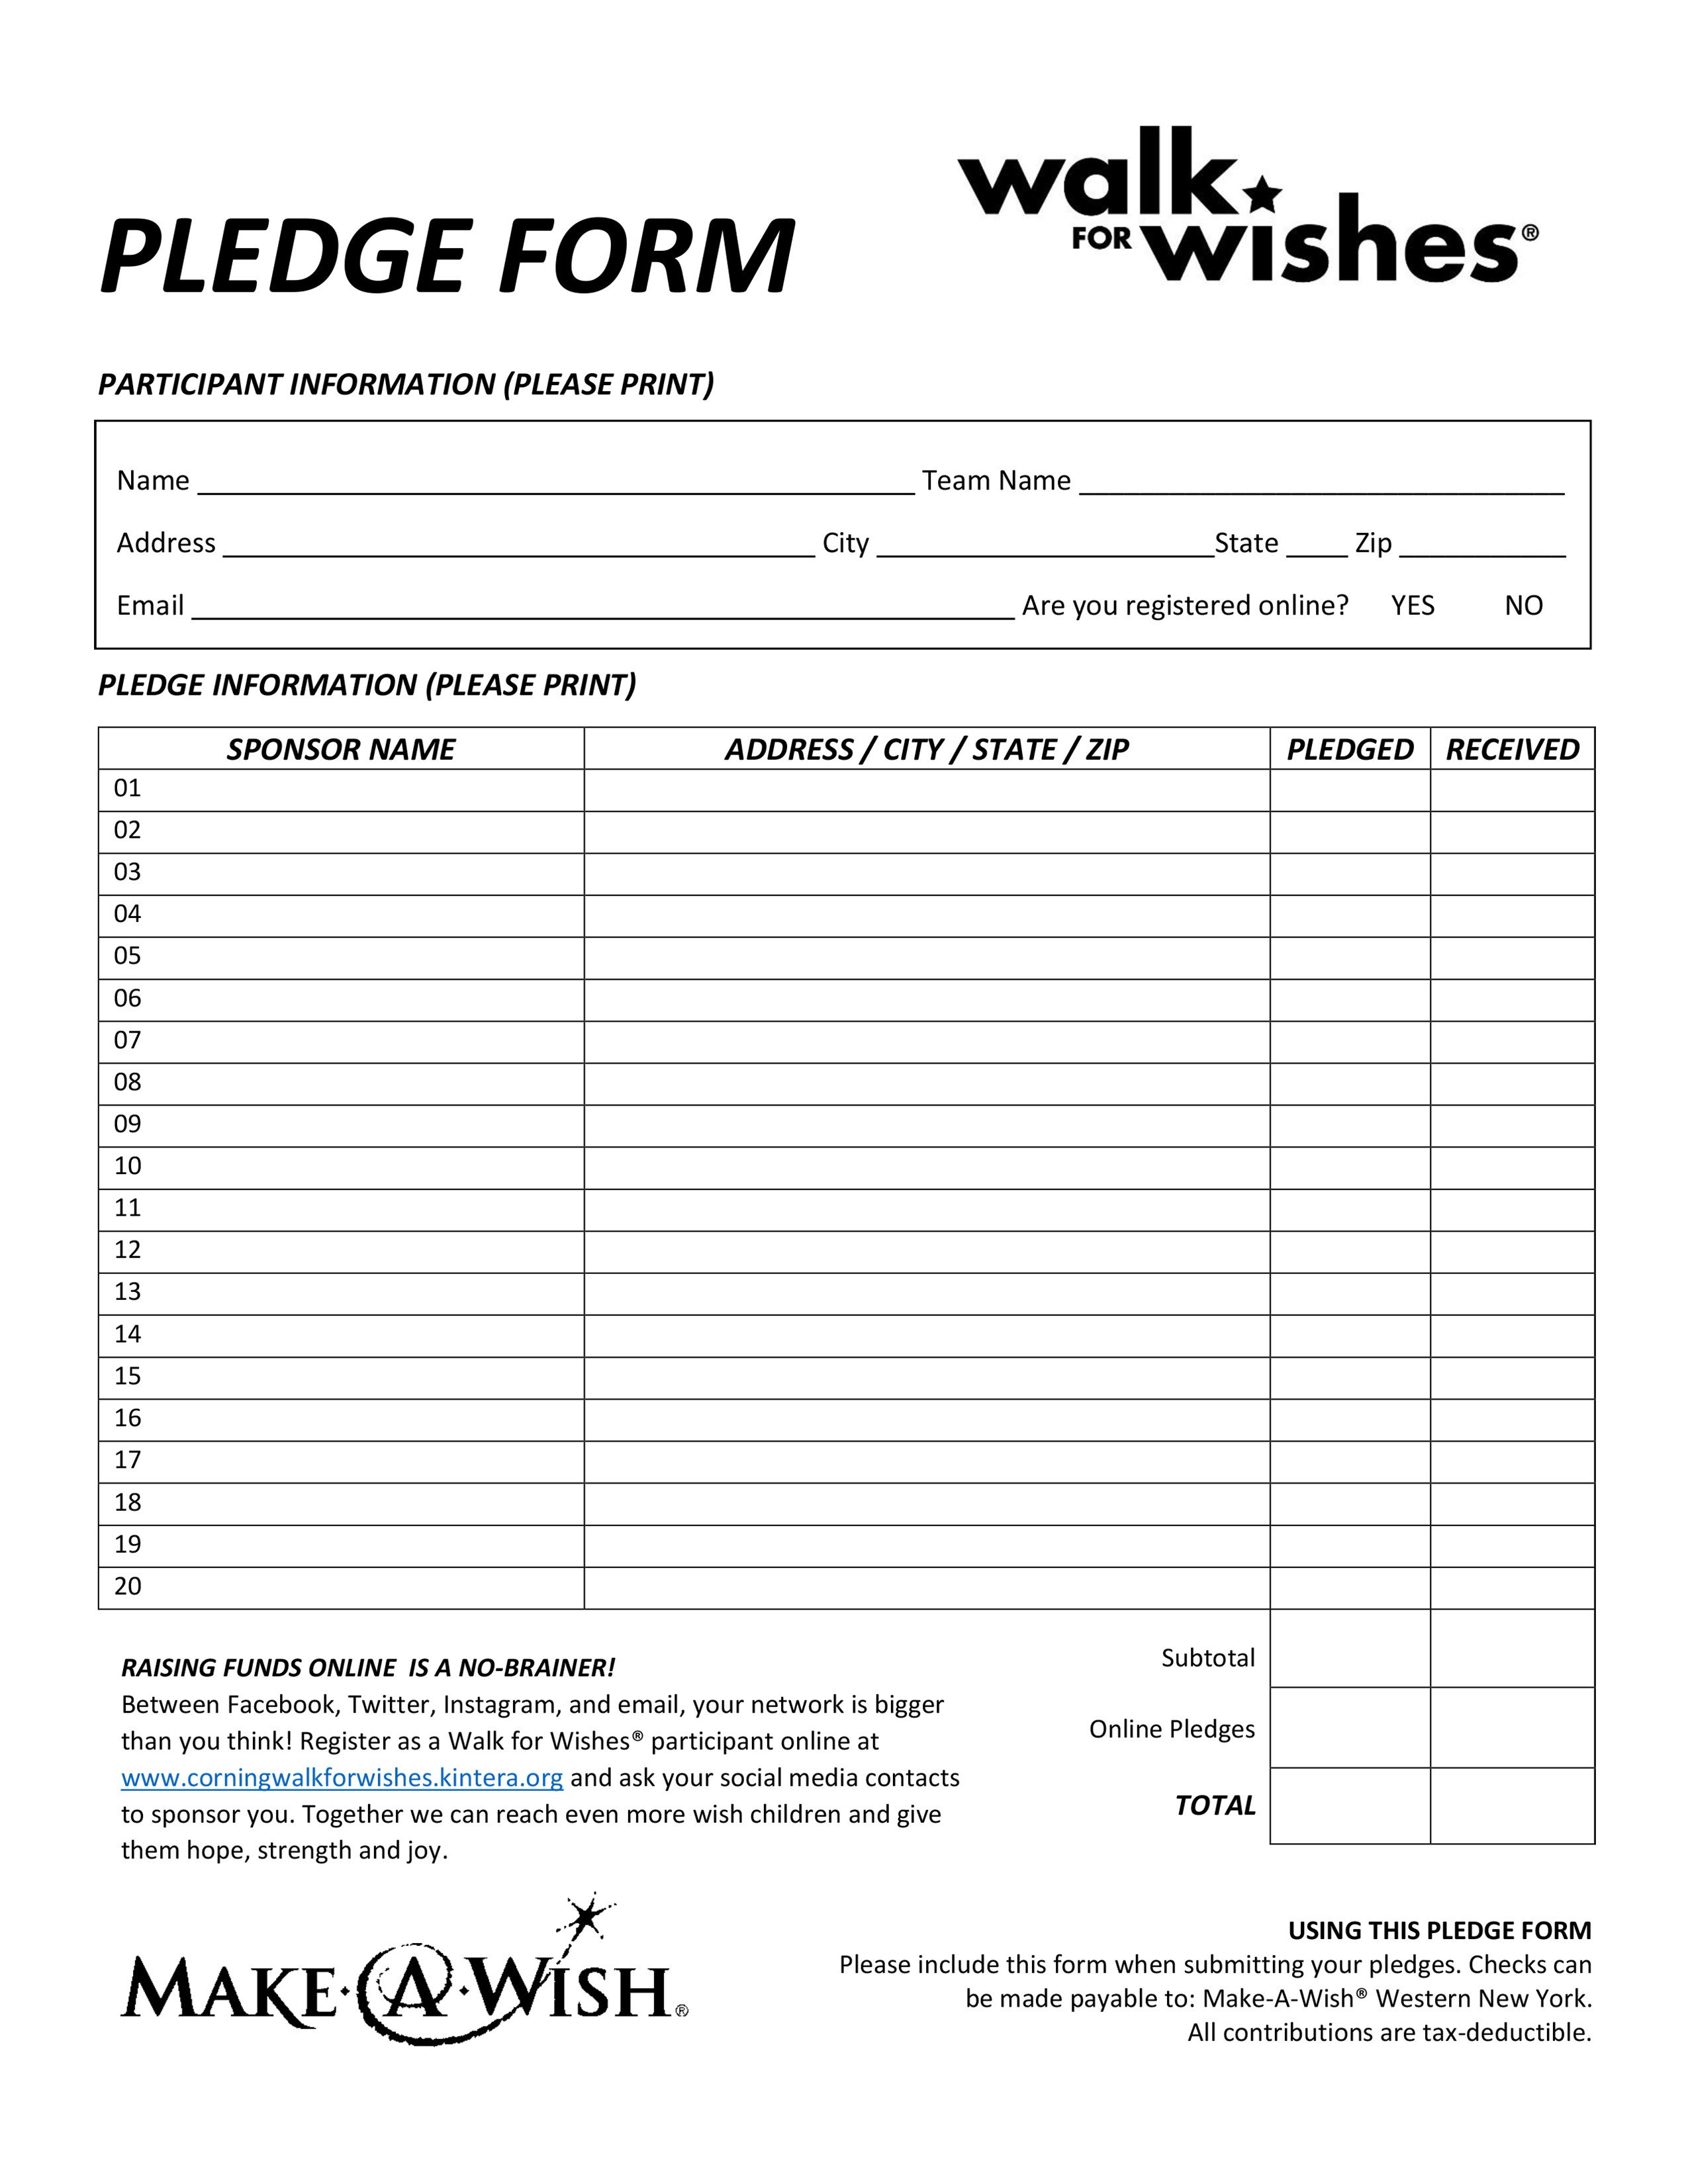 Walkathon Registration form Template Walk for Wishes Pledge form